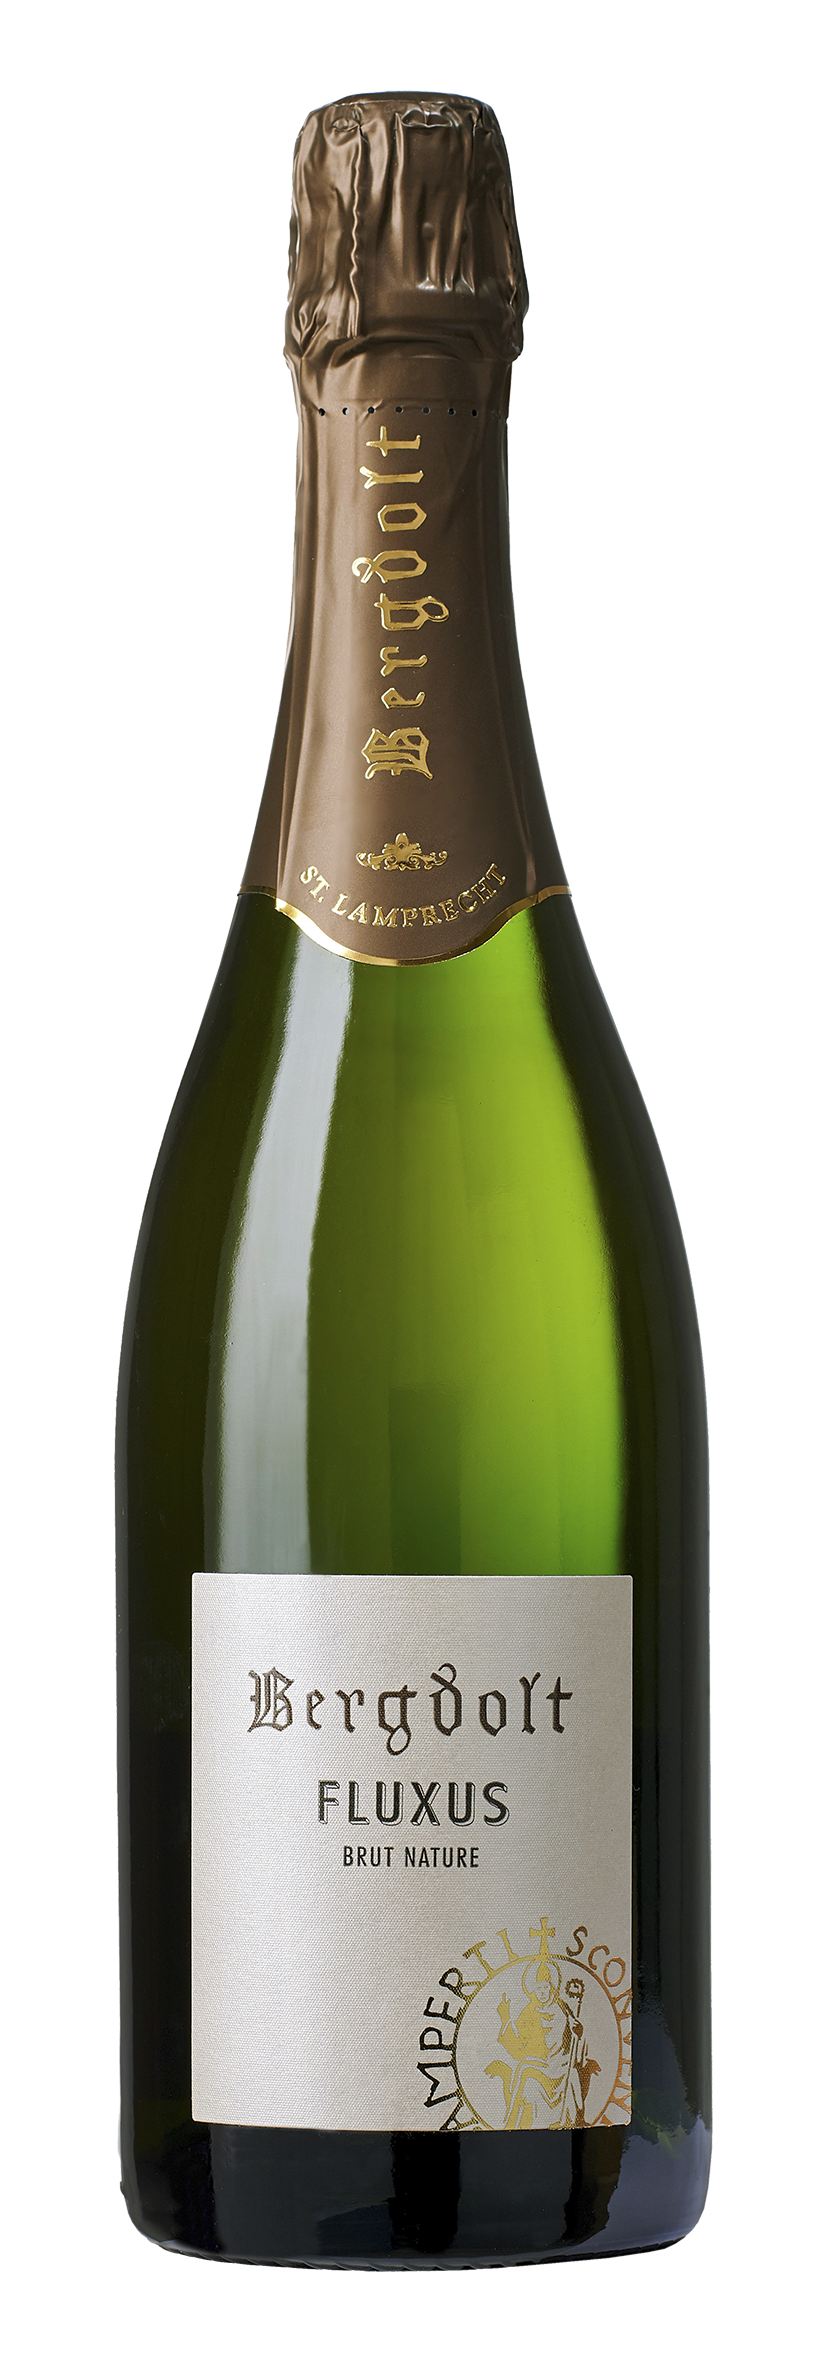 Chardonnay & Spätburgunder Brut nature Fluxus 2014